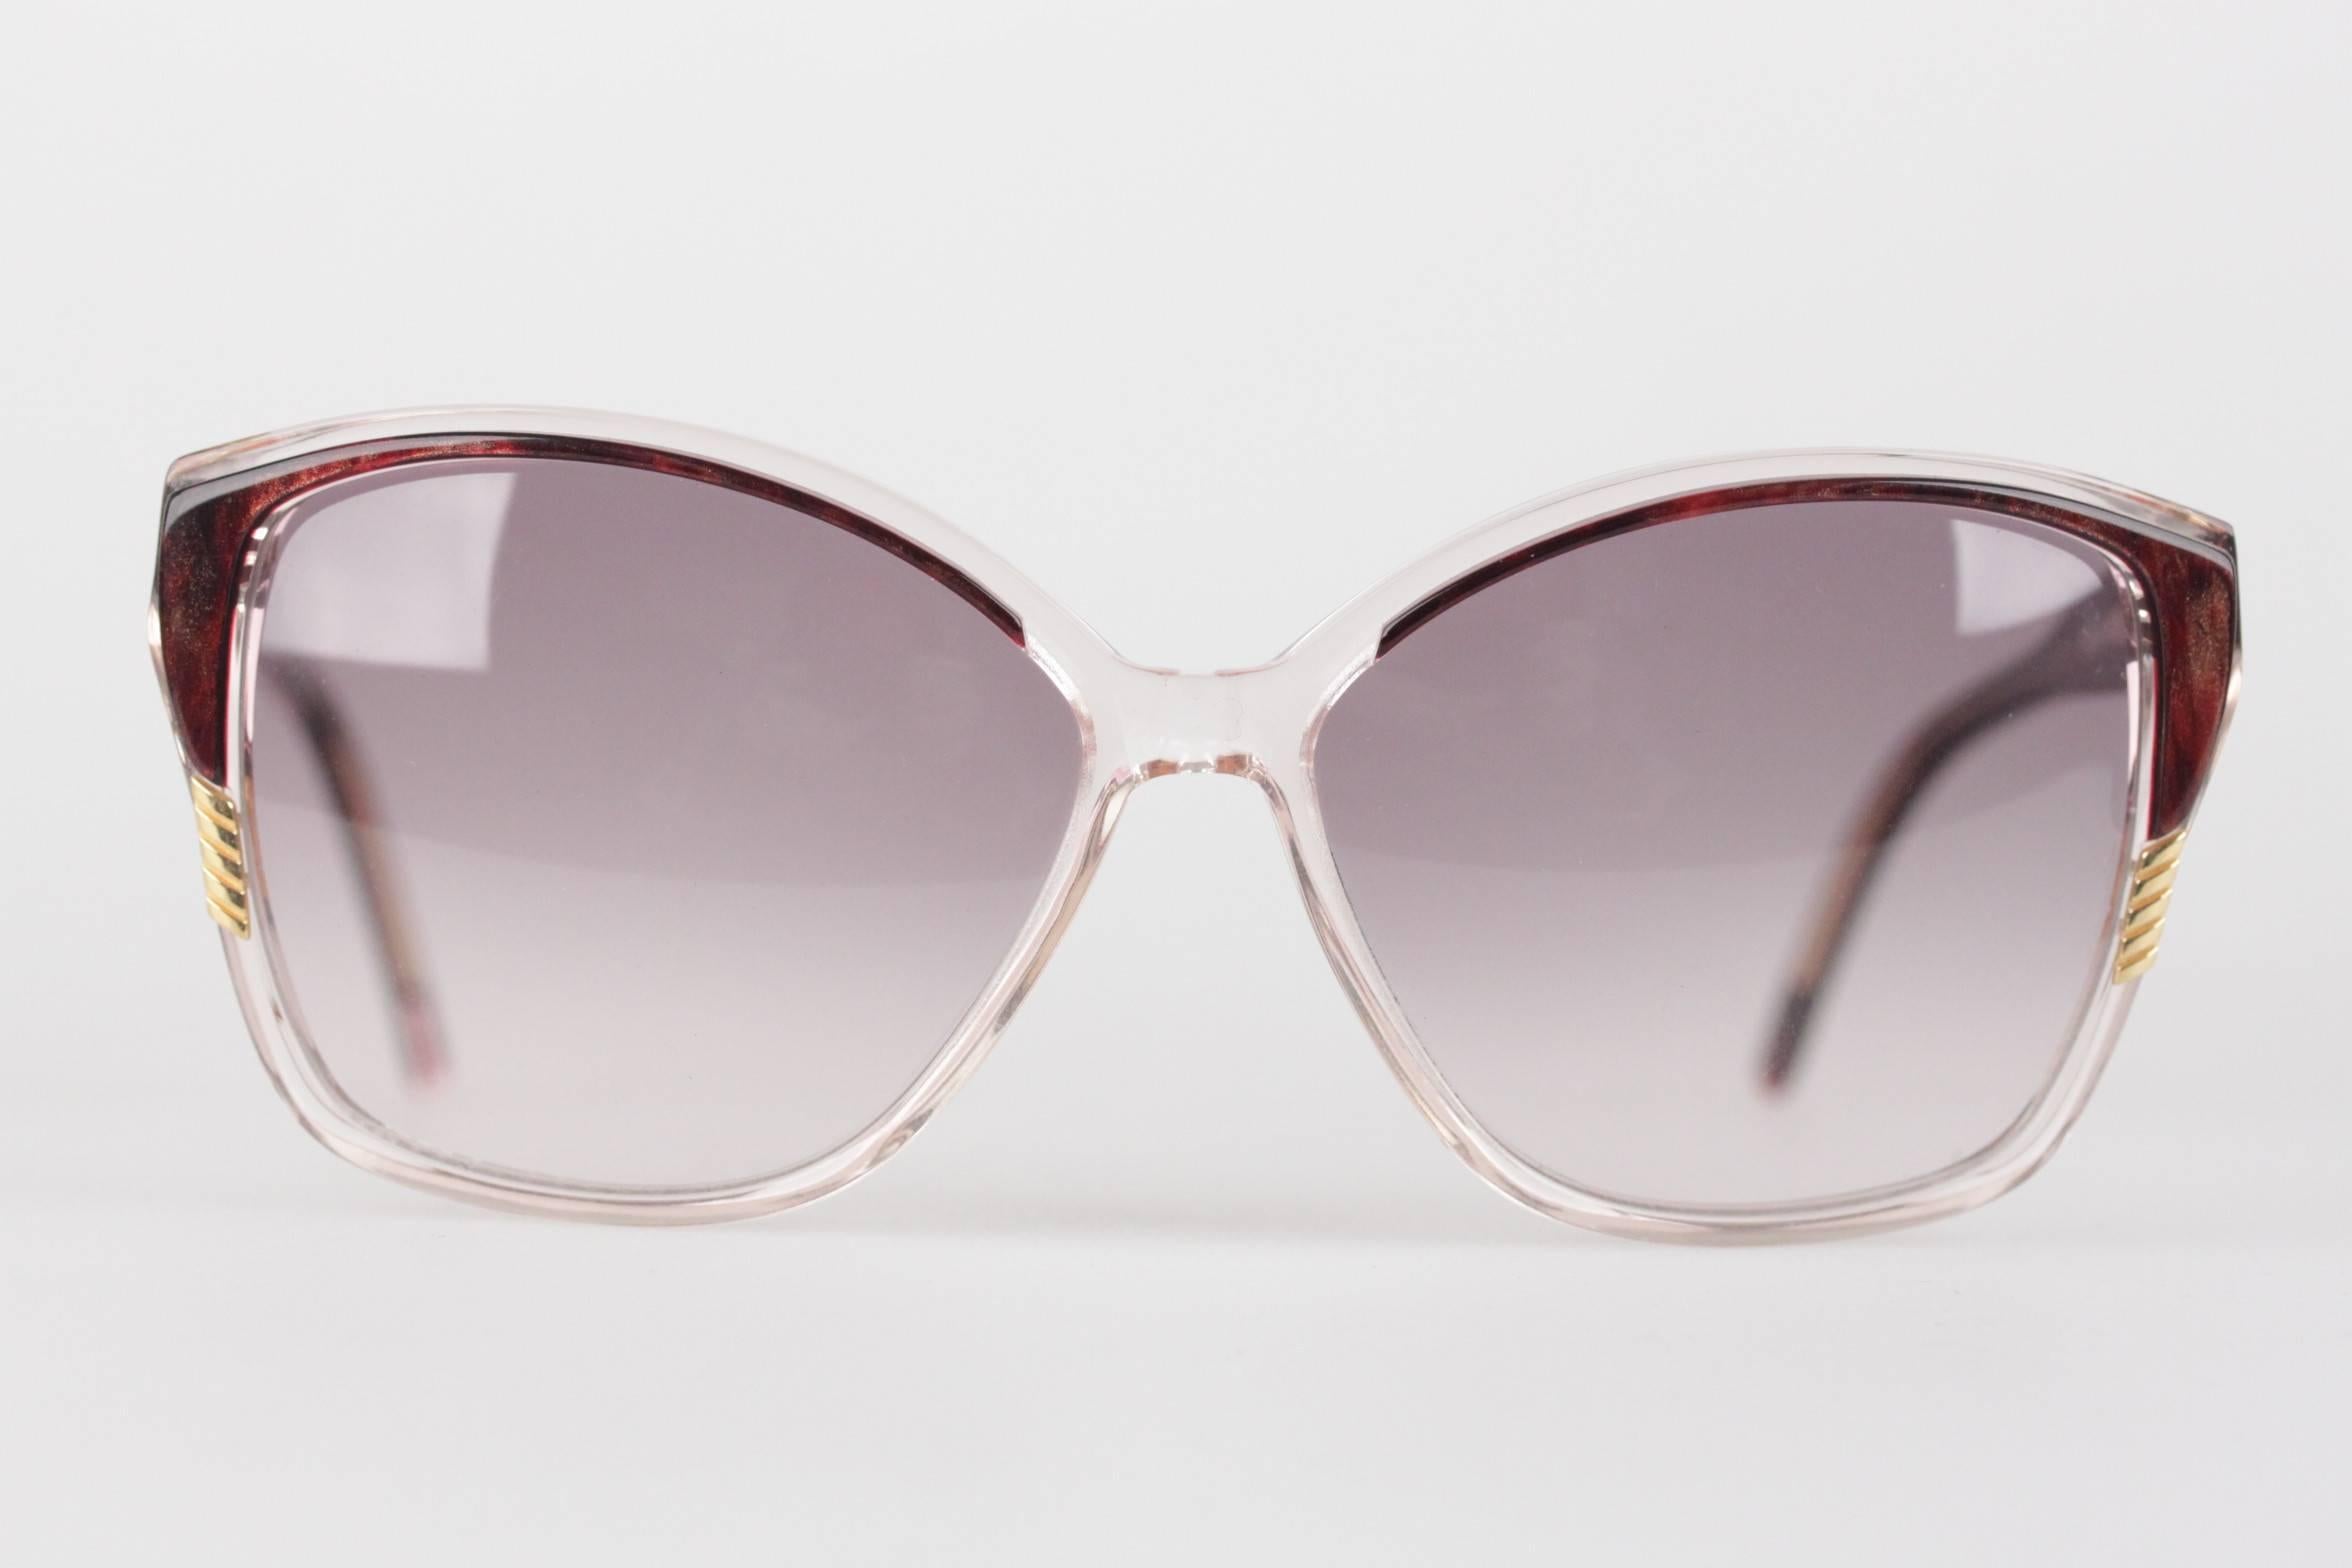 Women's YVES SAINT LAURENT Vintage MINT Marbled Handmade Sunglasses 8728 P 124